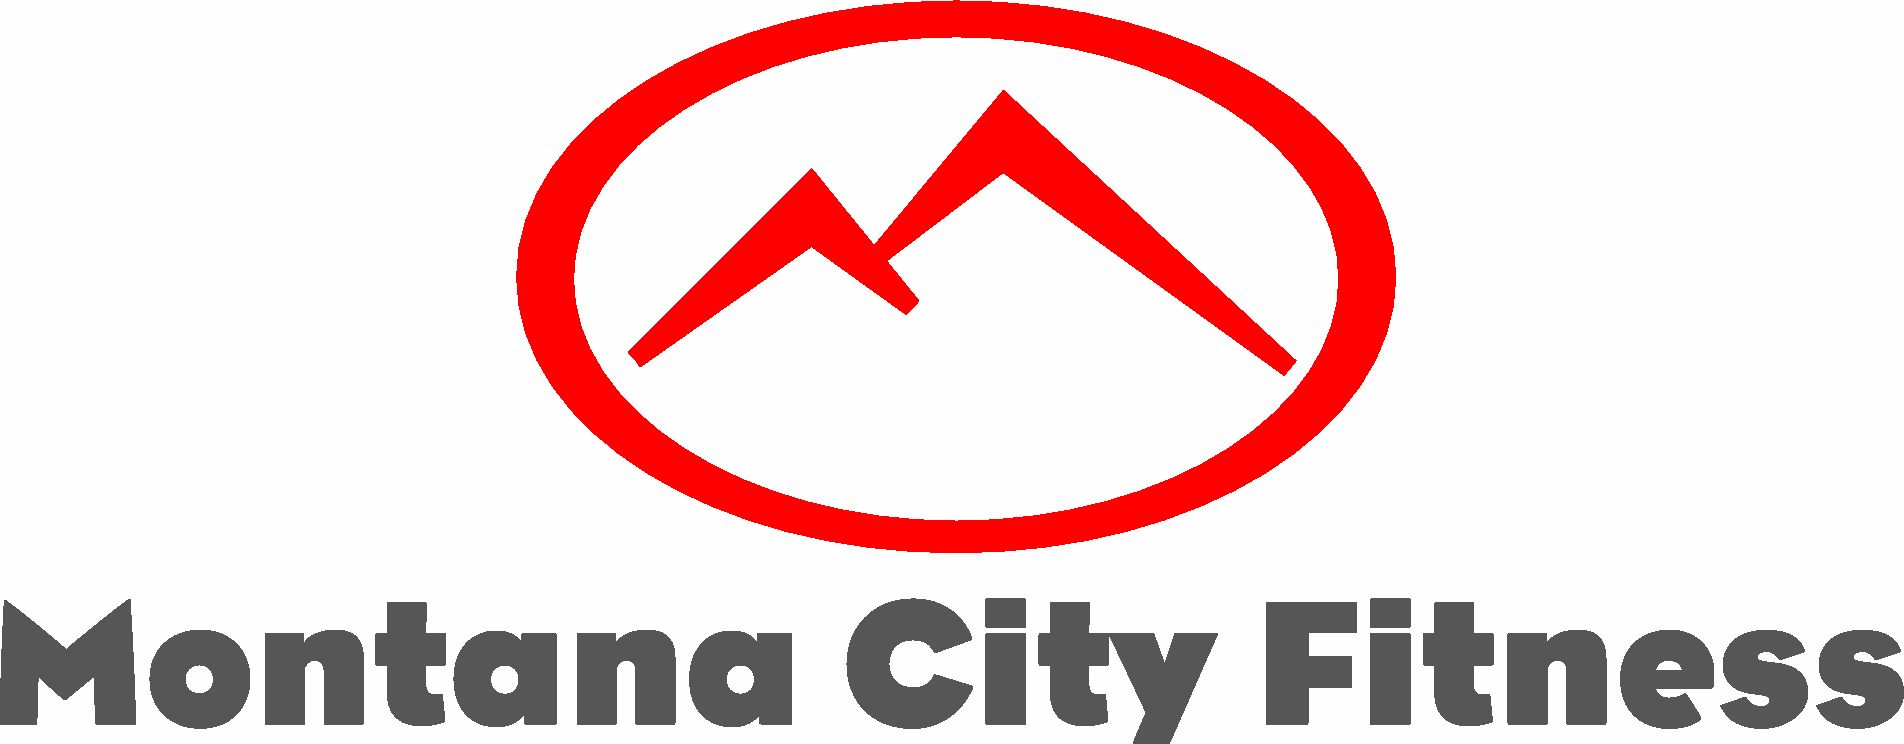 Montana City Fitness